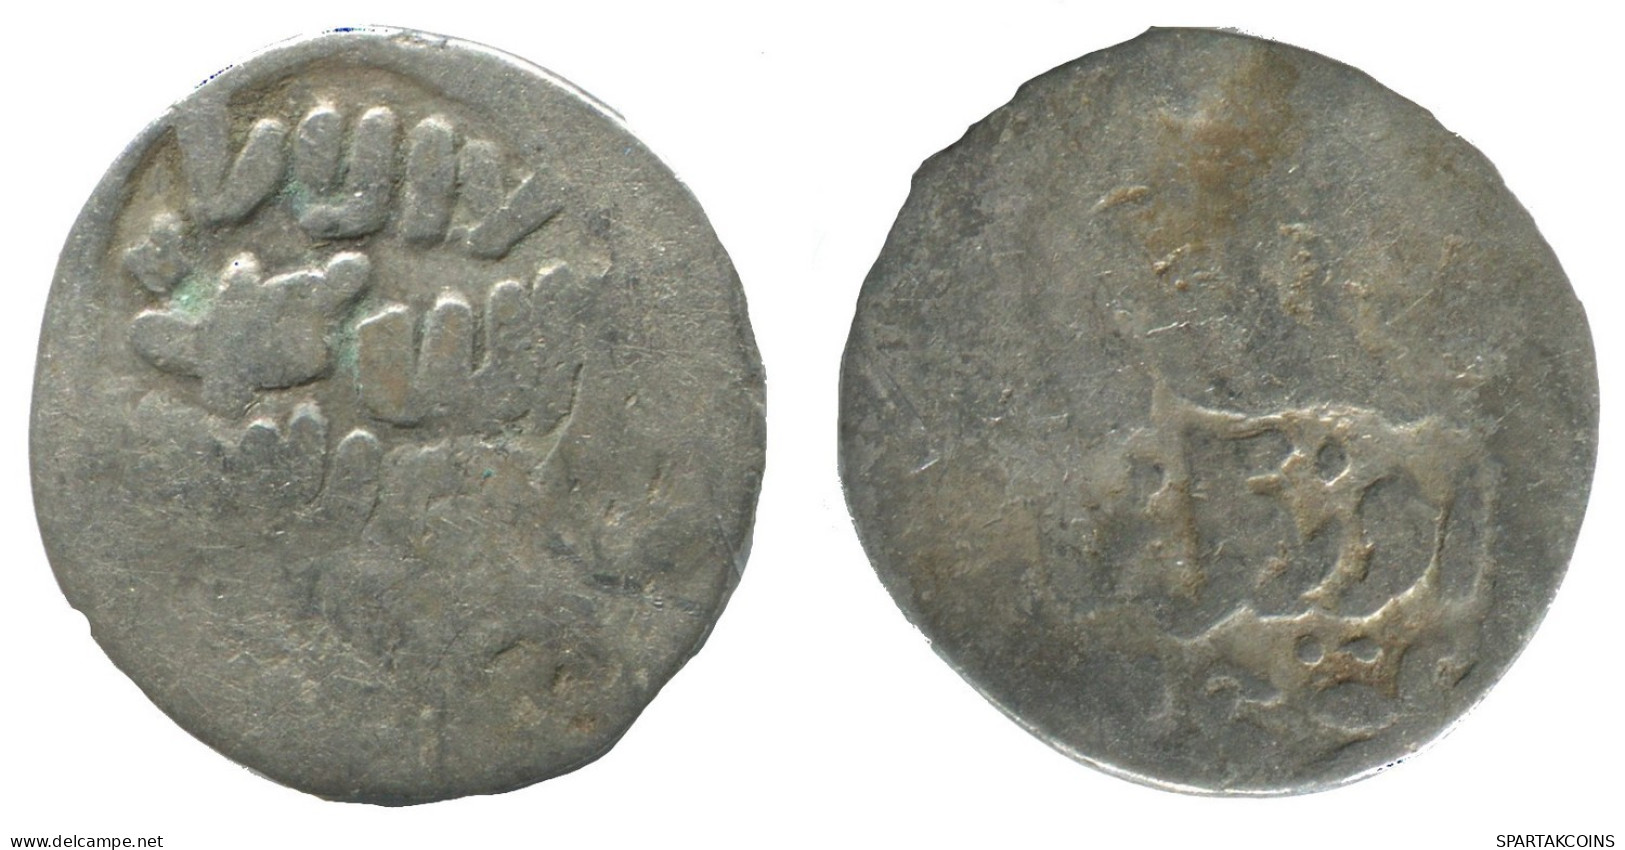 GOLDEN HORDE Silver Dirham Medieval Islamic Coin 1g/17mm #NNN1995.8.F.A - Islamische Münzen